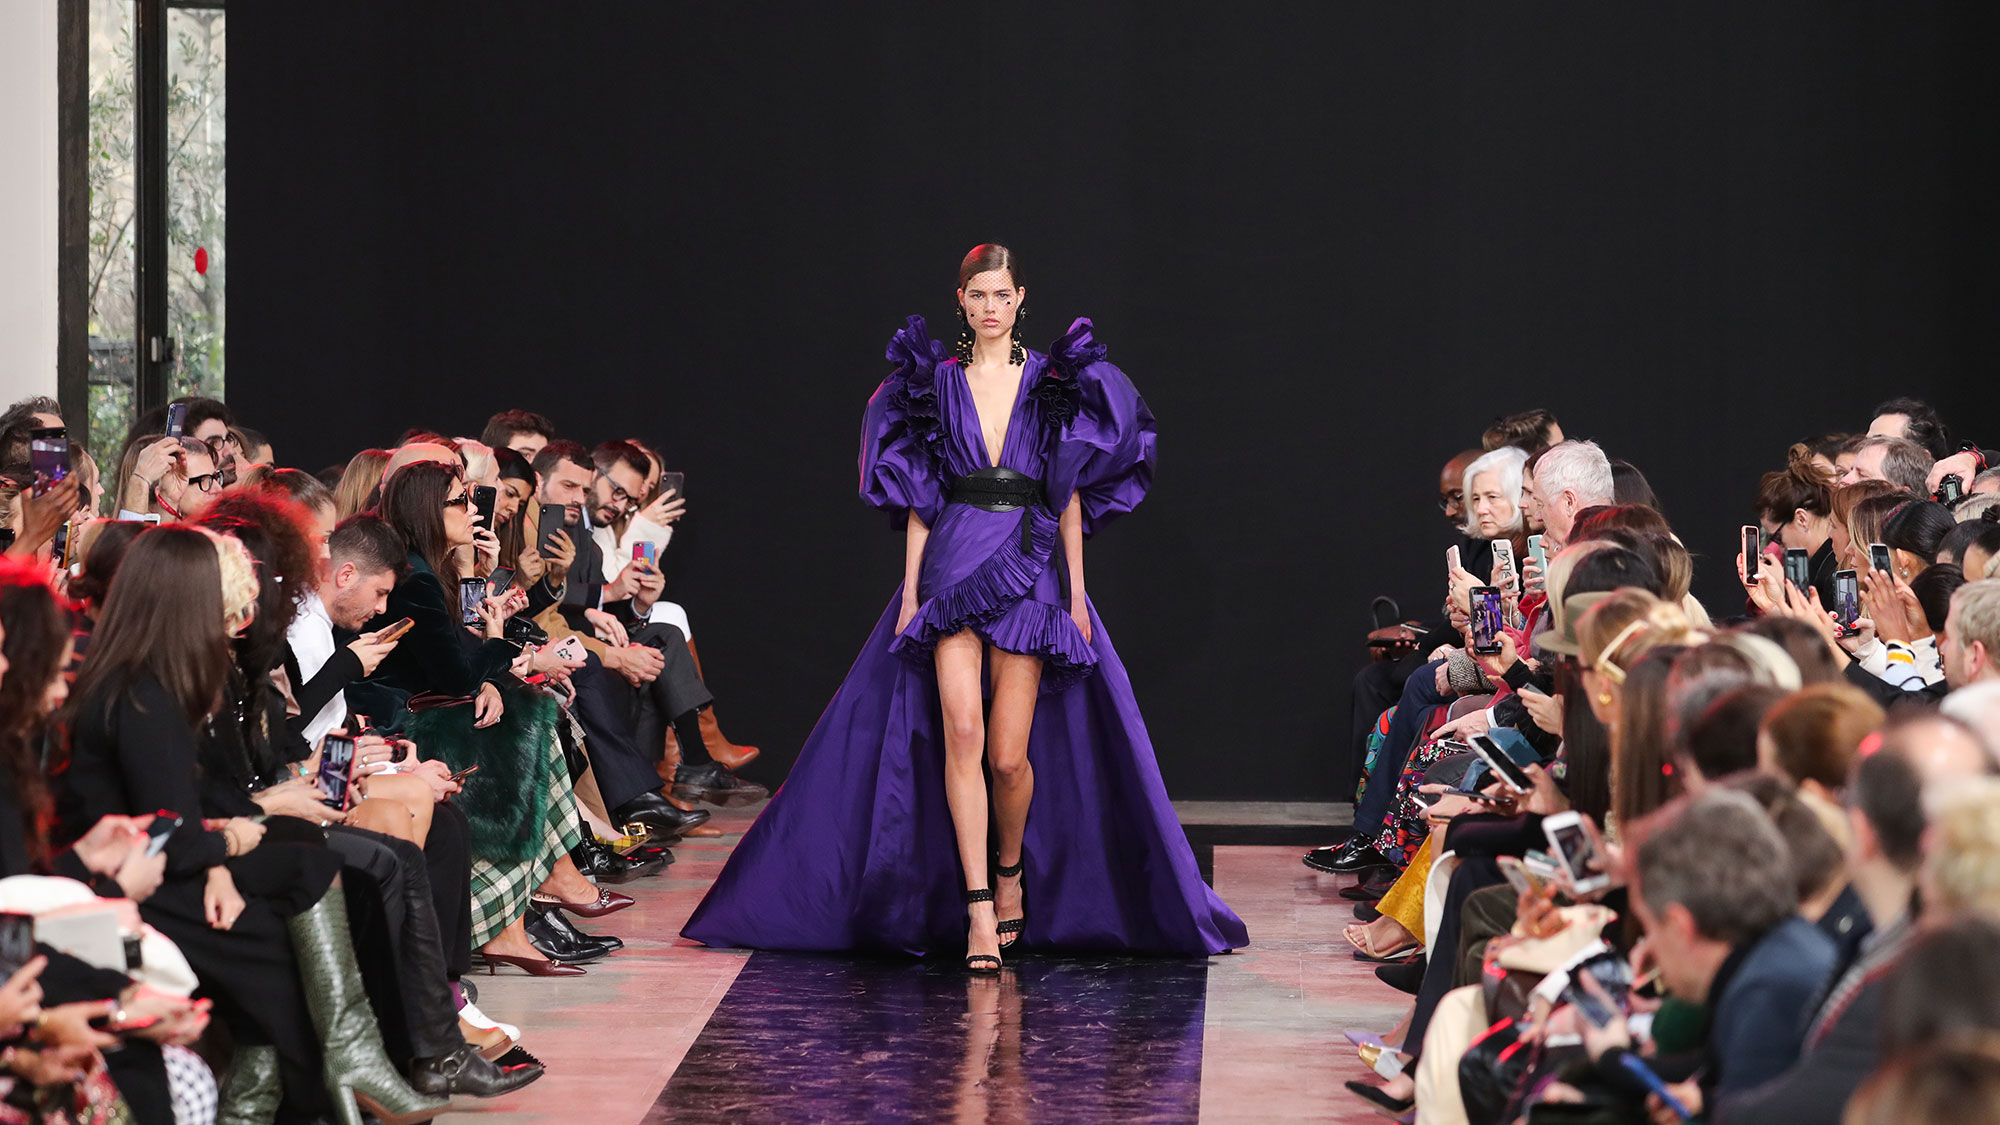 Paris Fashion Week will be going ahead despite the pandemic